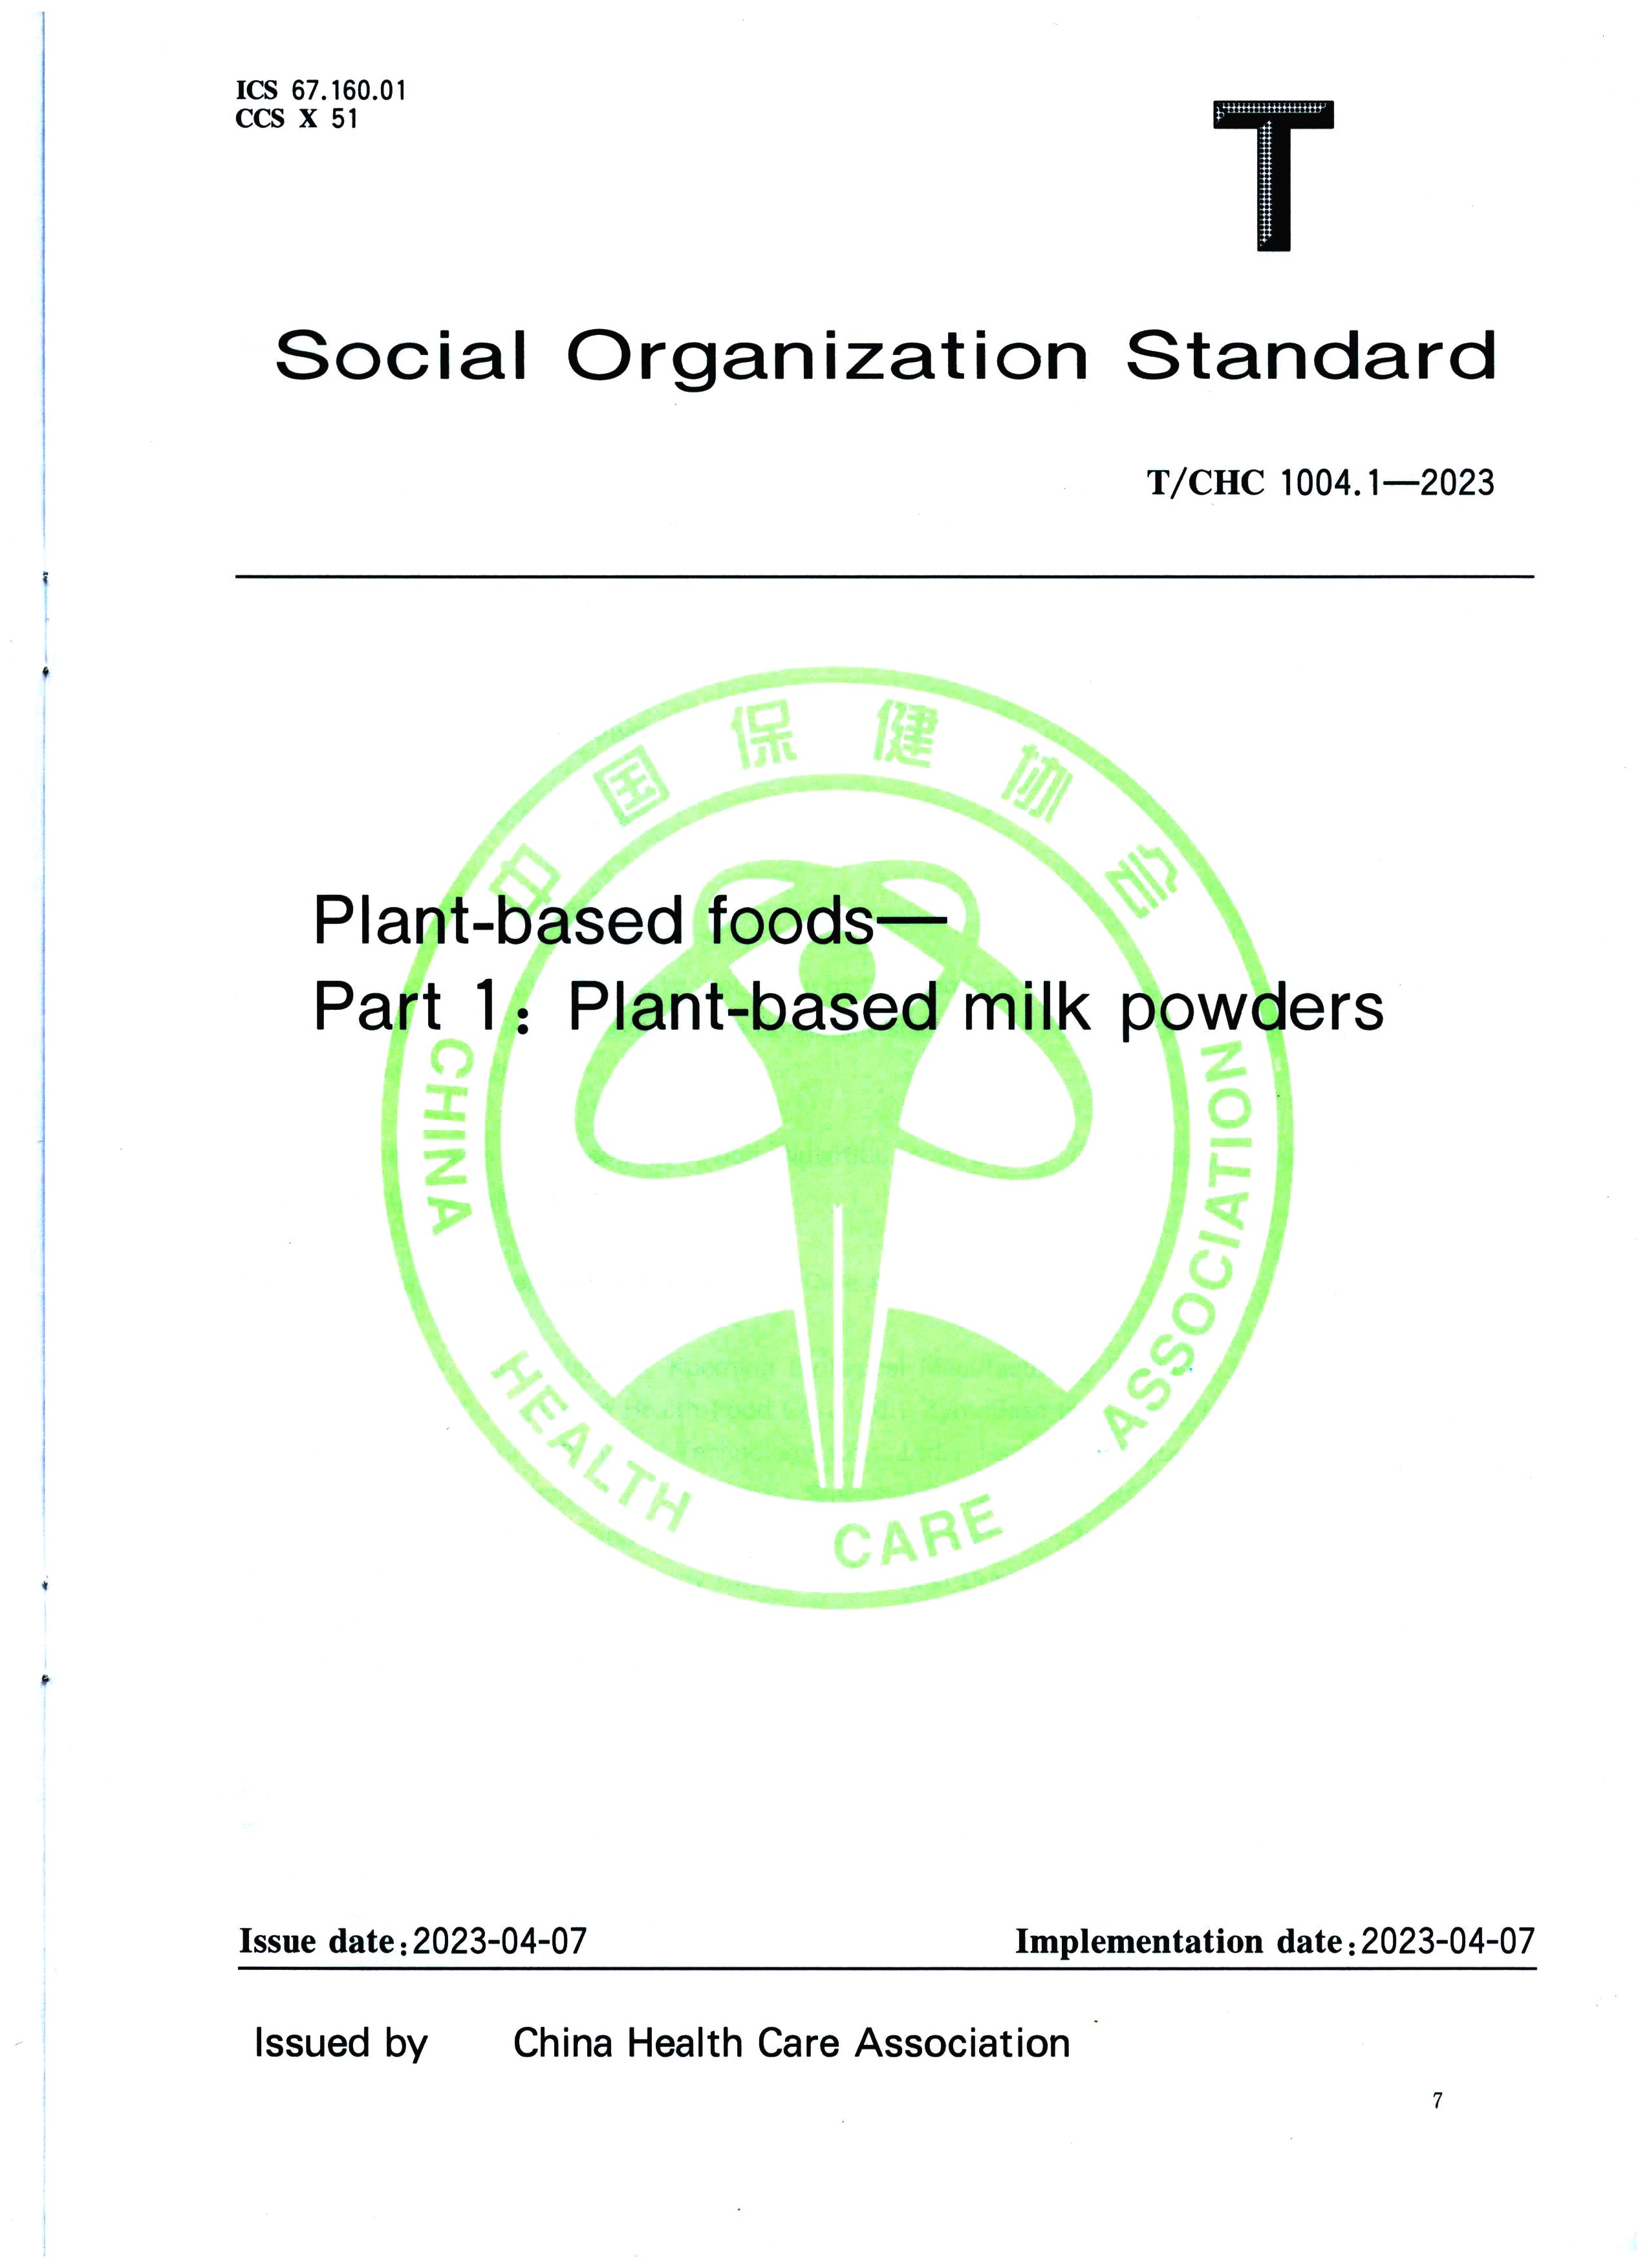 China Standards Press에서 발행한 '식물성 식품 파트 1 식물성 분유' 그룹 표준이 공식 발표되었습니다.